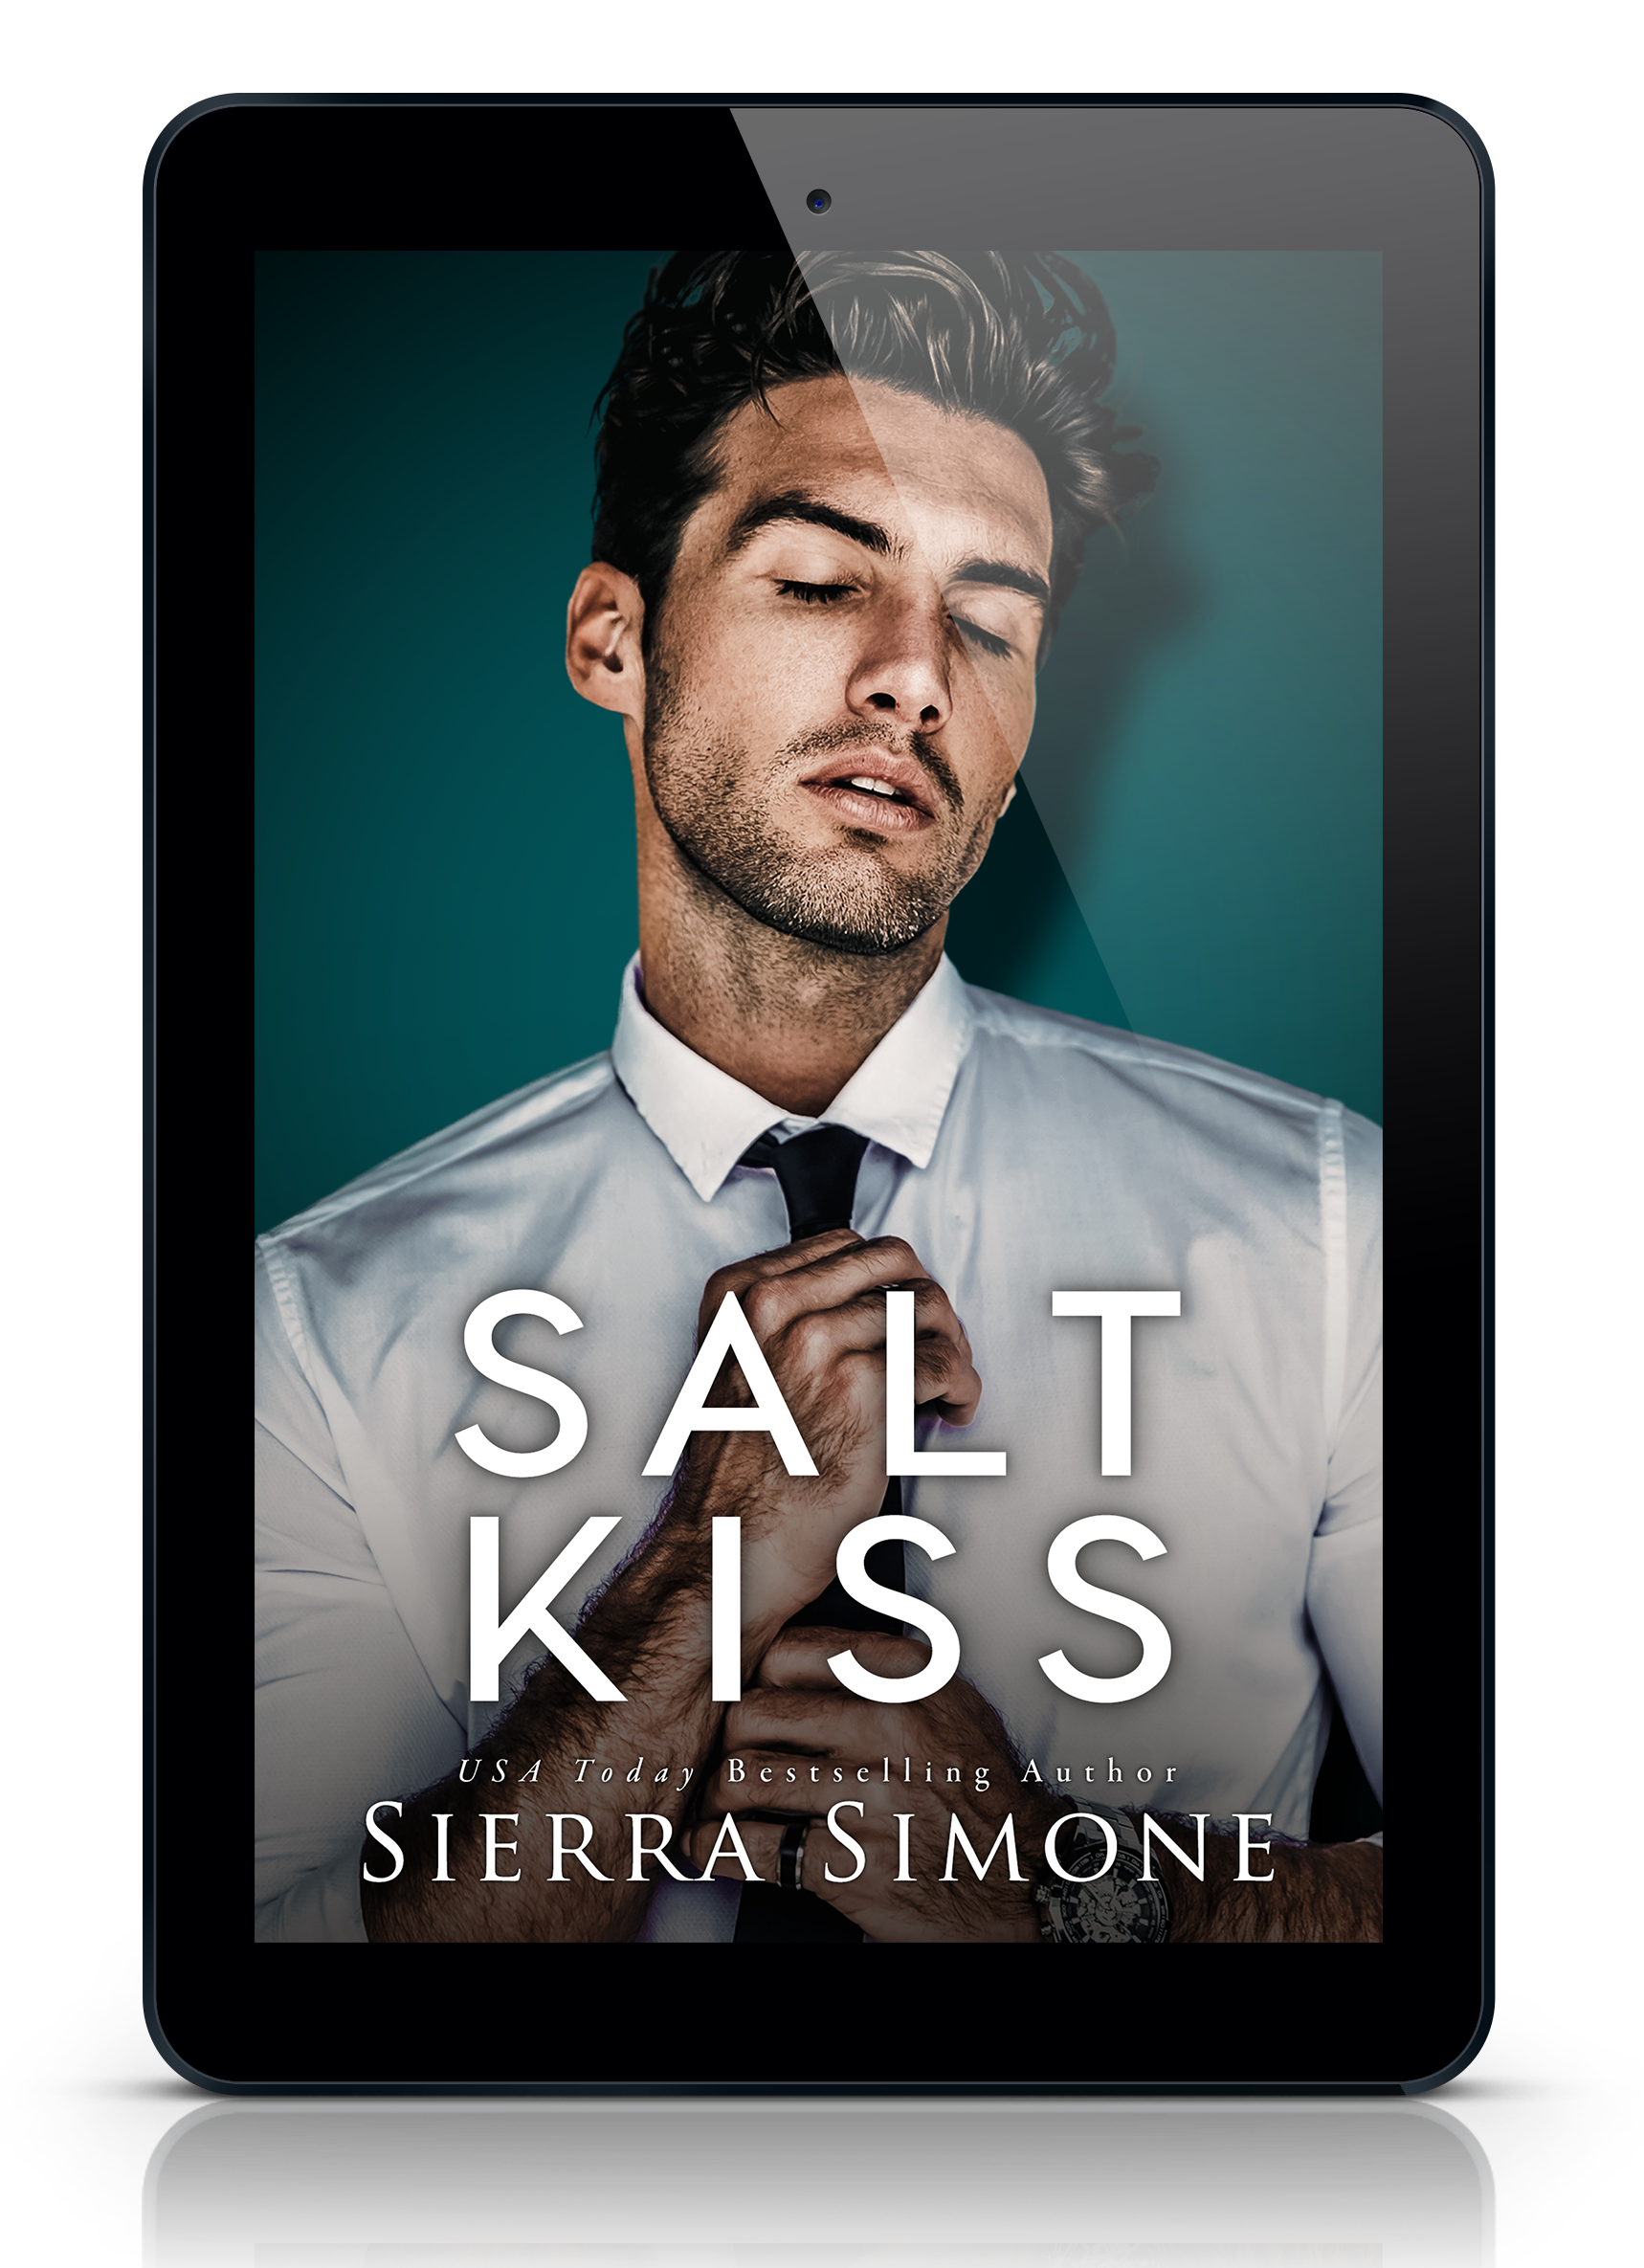 Sierra Simone, USA Today bestselling romance author image